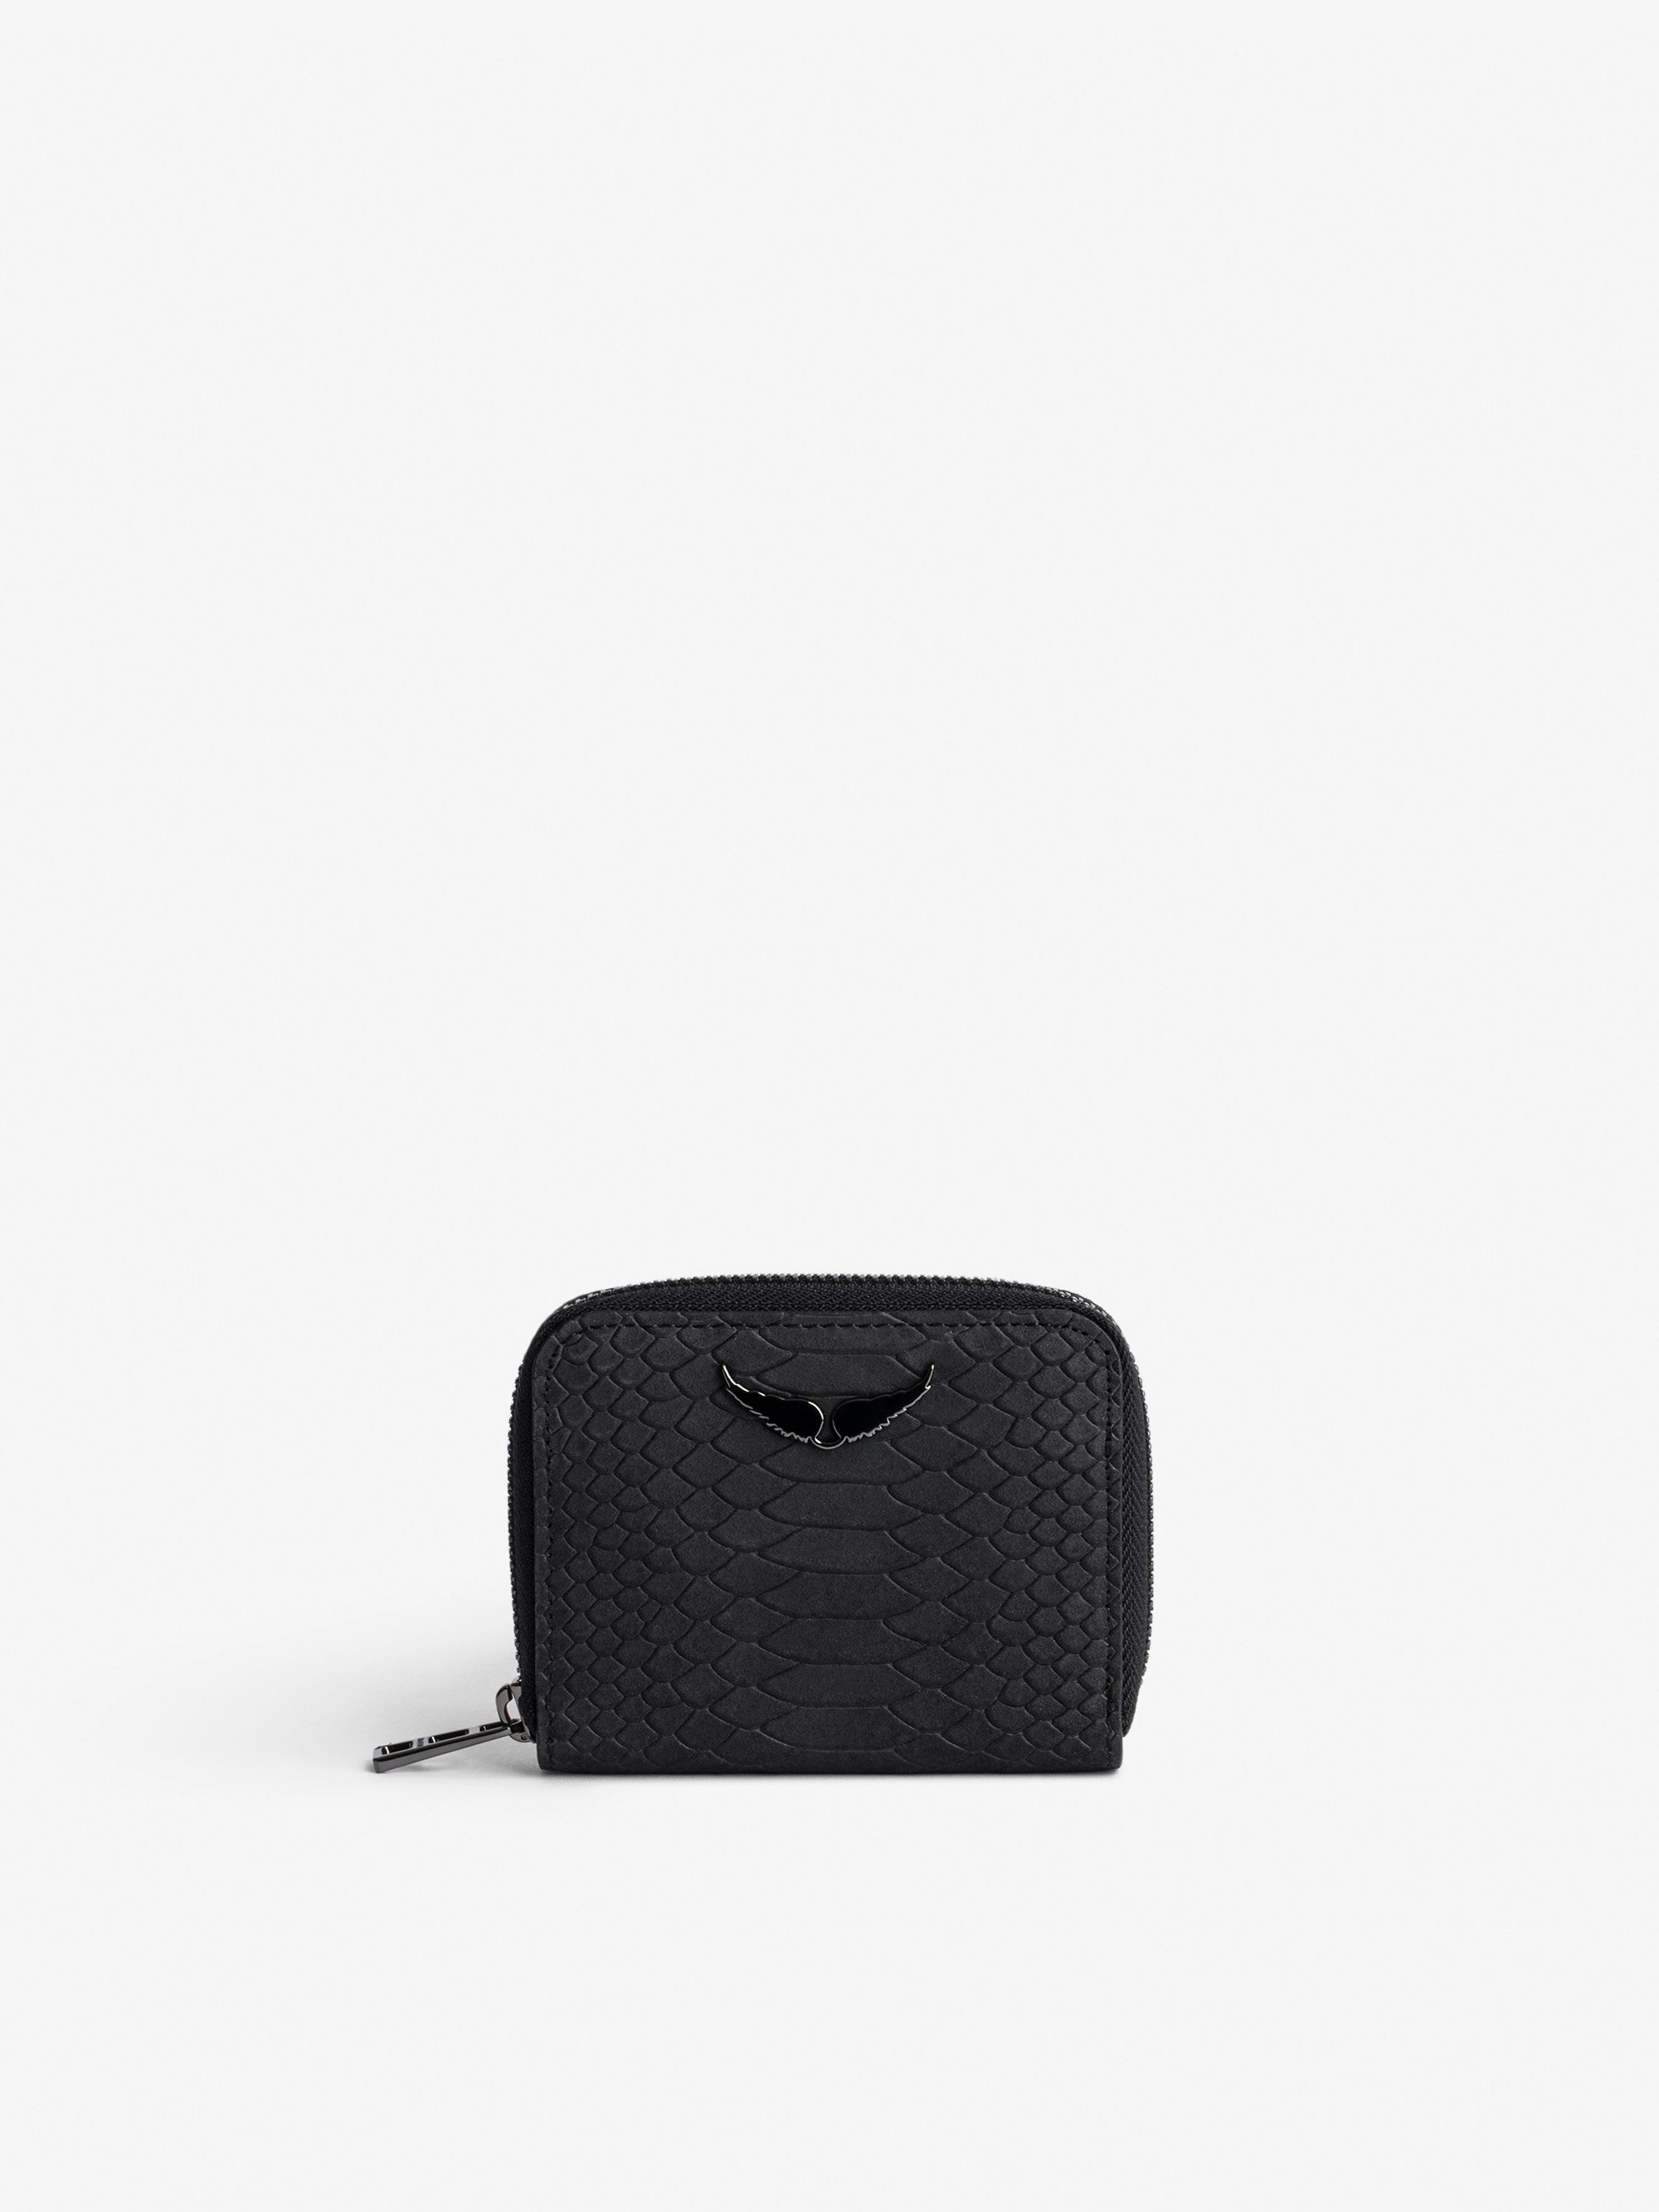 Mini ZV Wallet - Women's wallet in black python-effect leather